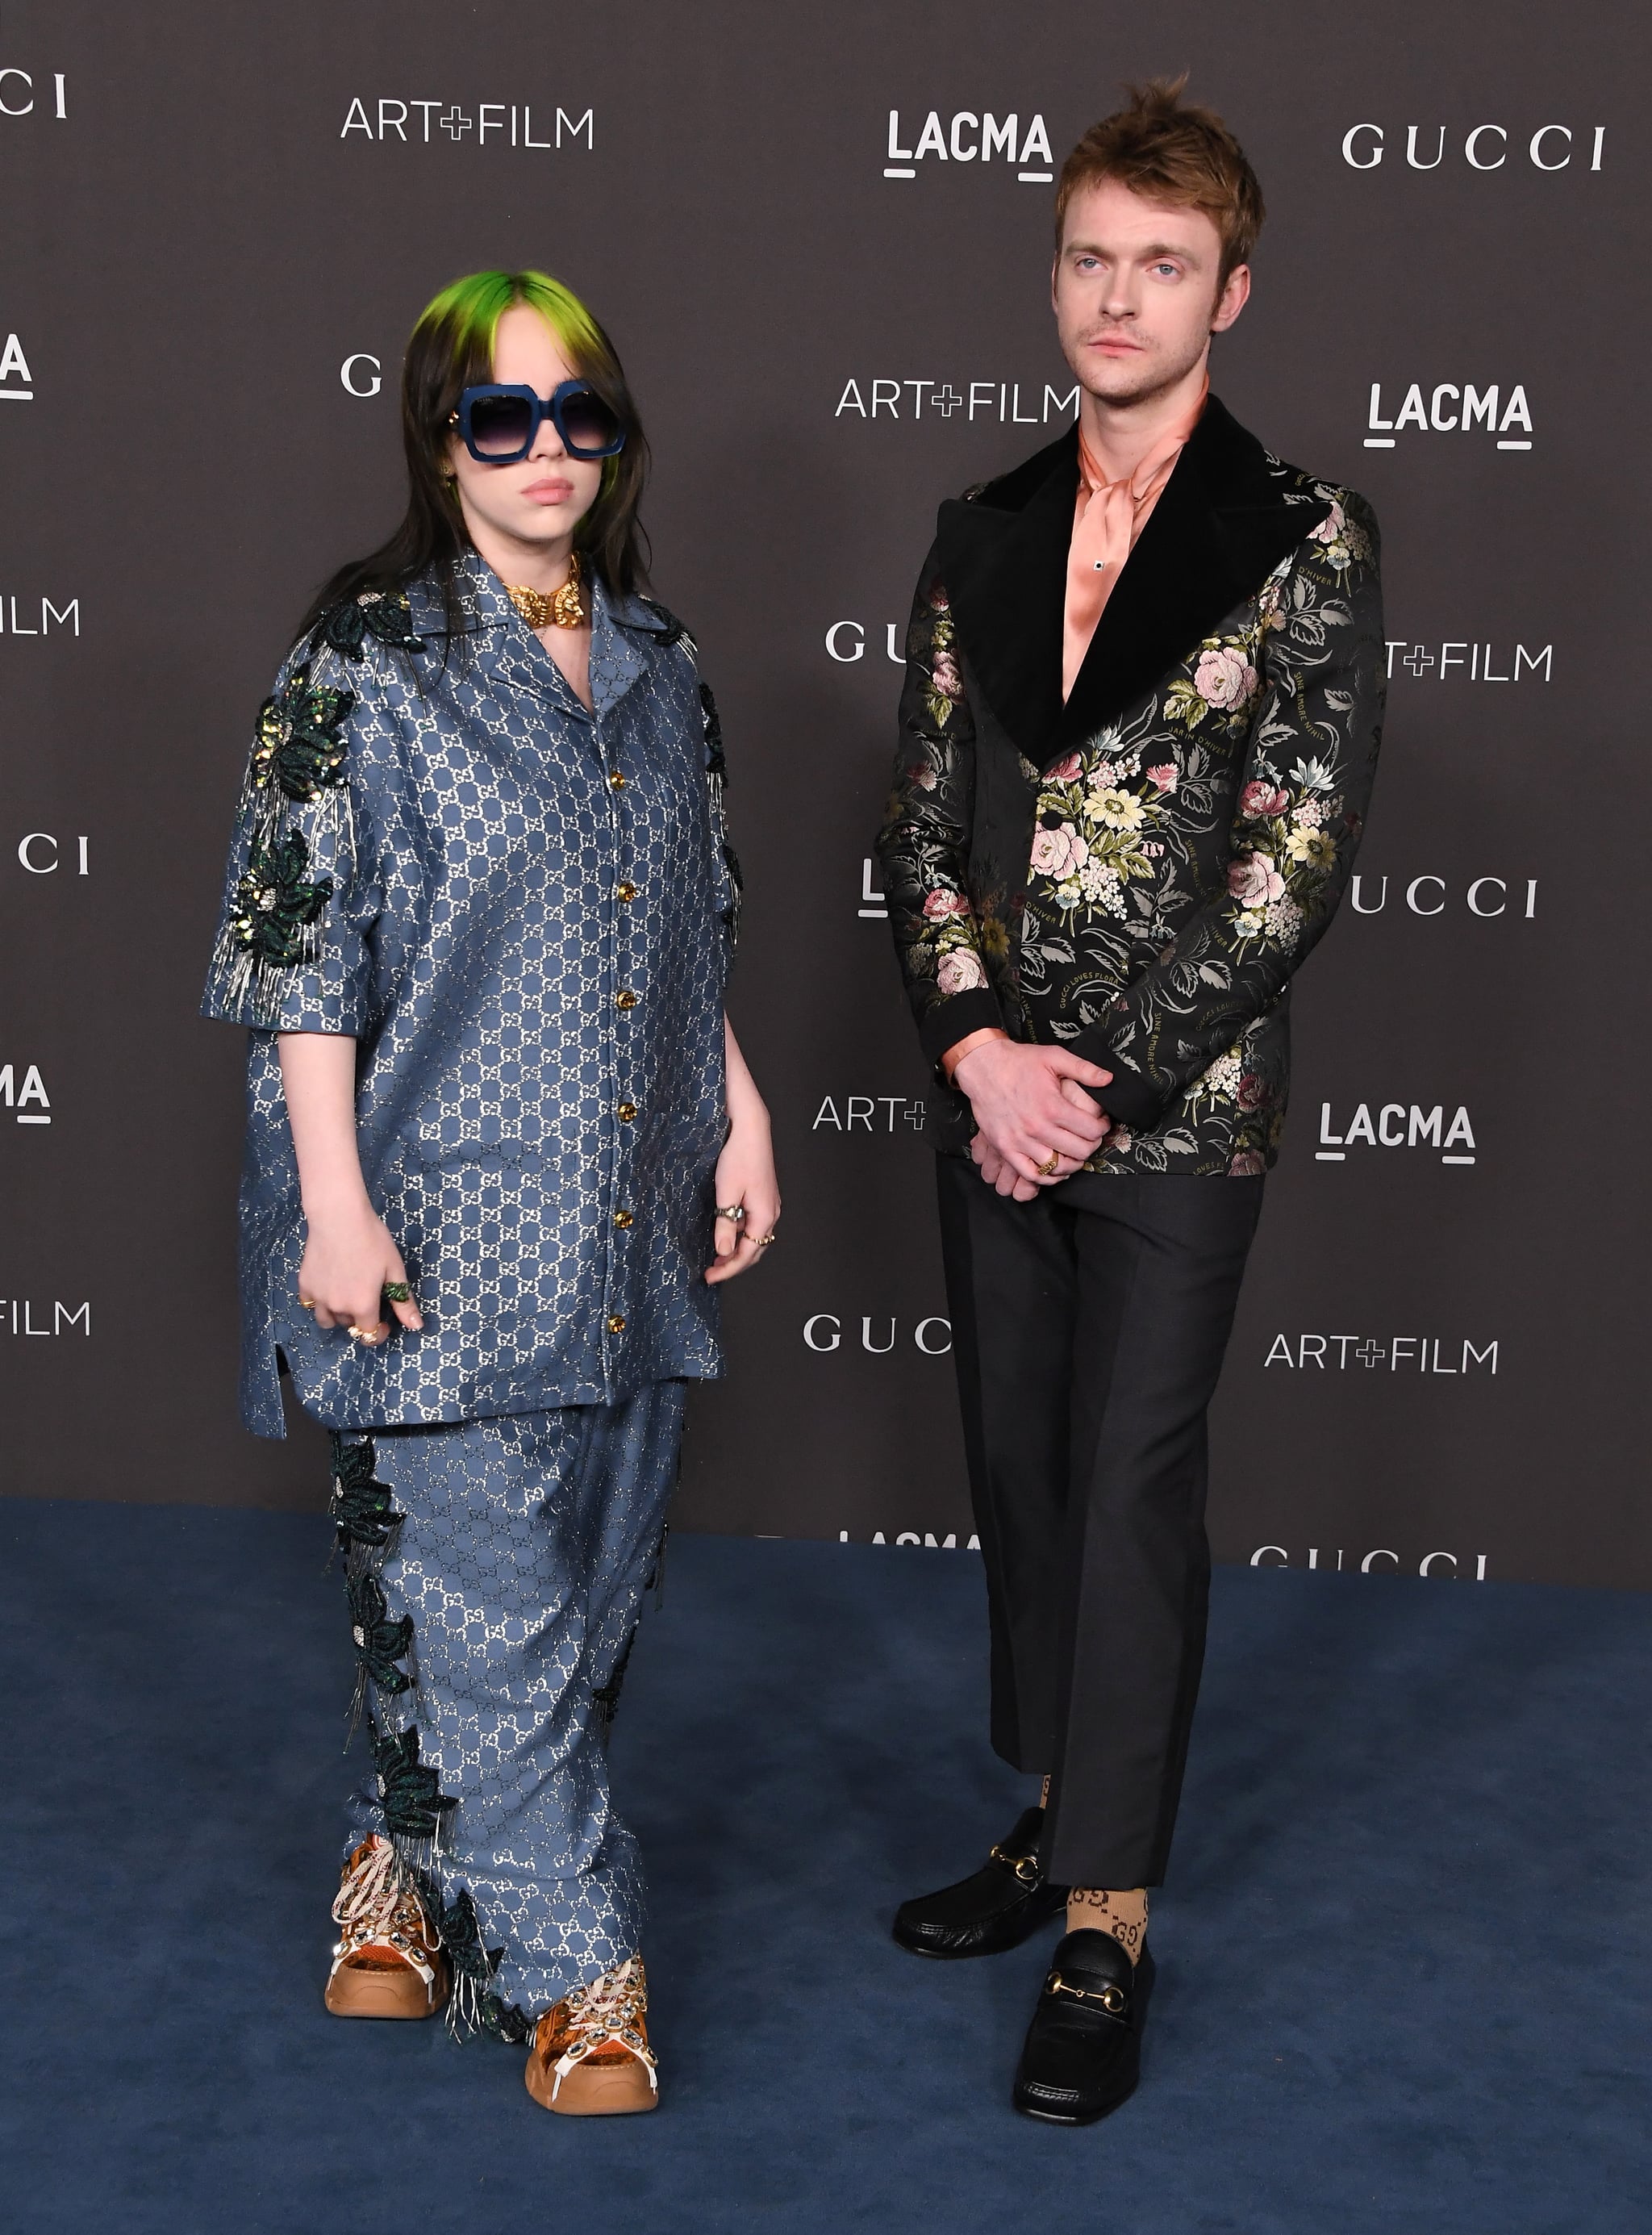 Fashion, & Style | Billie Eilish Head-to-Toe Gucci and Looked Like a Total Badass | POPSUGAR Fashion Photo